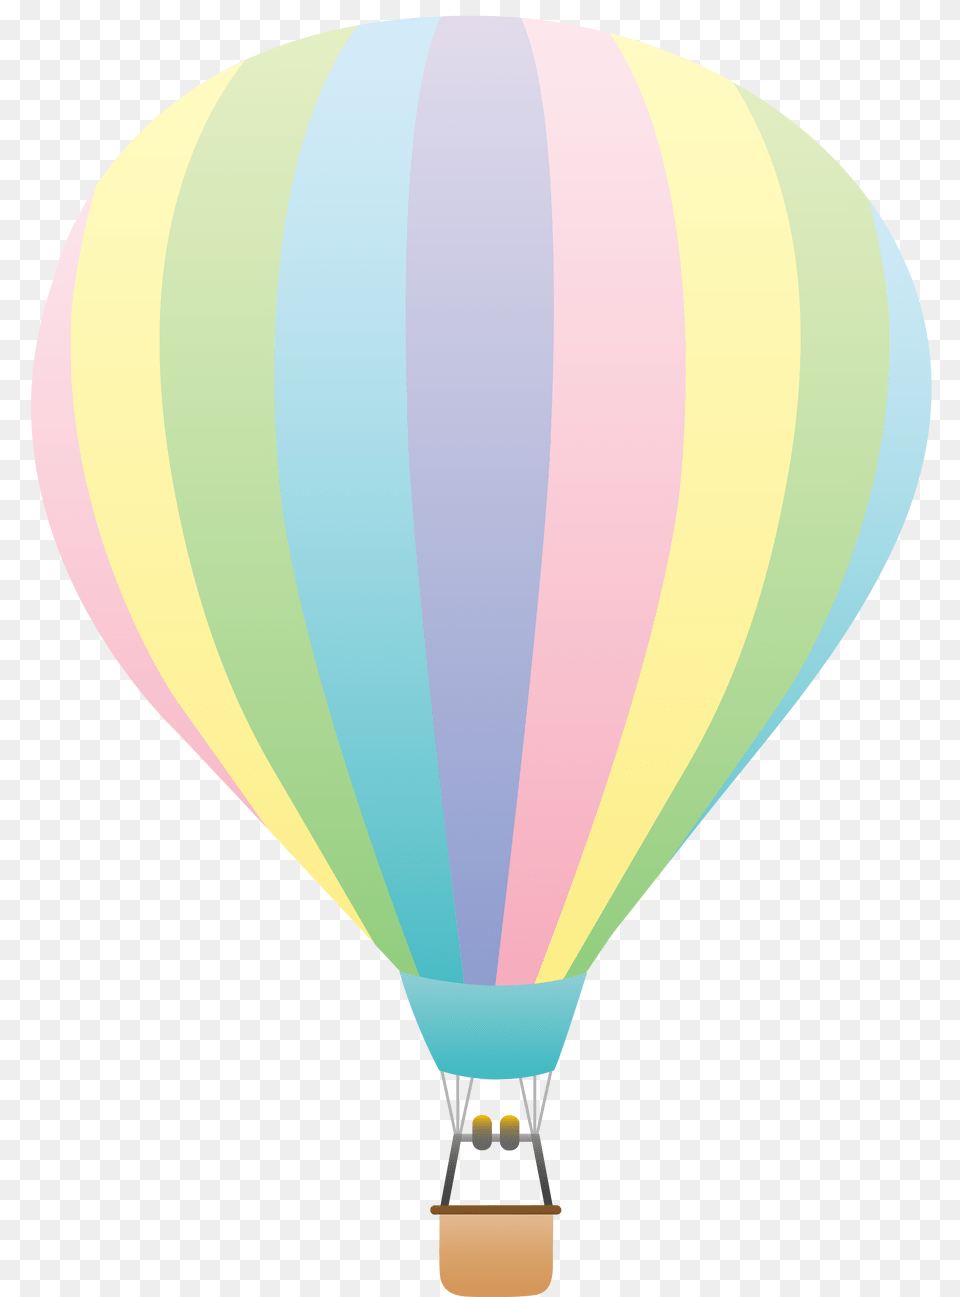 Striped Pastel Colored Hot Air Balloon, Aircraft, Hot Air Balloon, Transportation, Vehicle Free Transparent Png